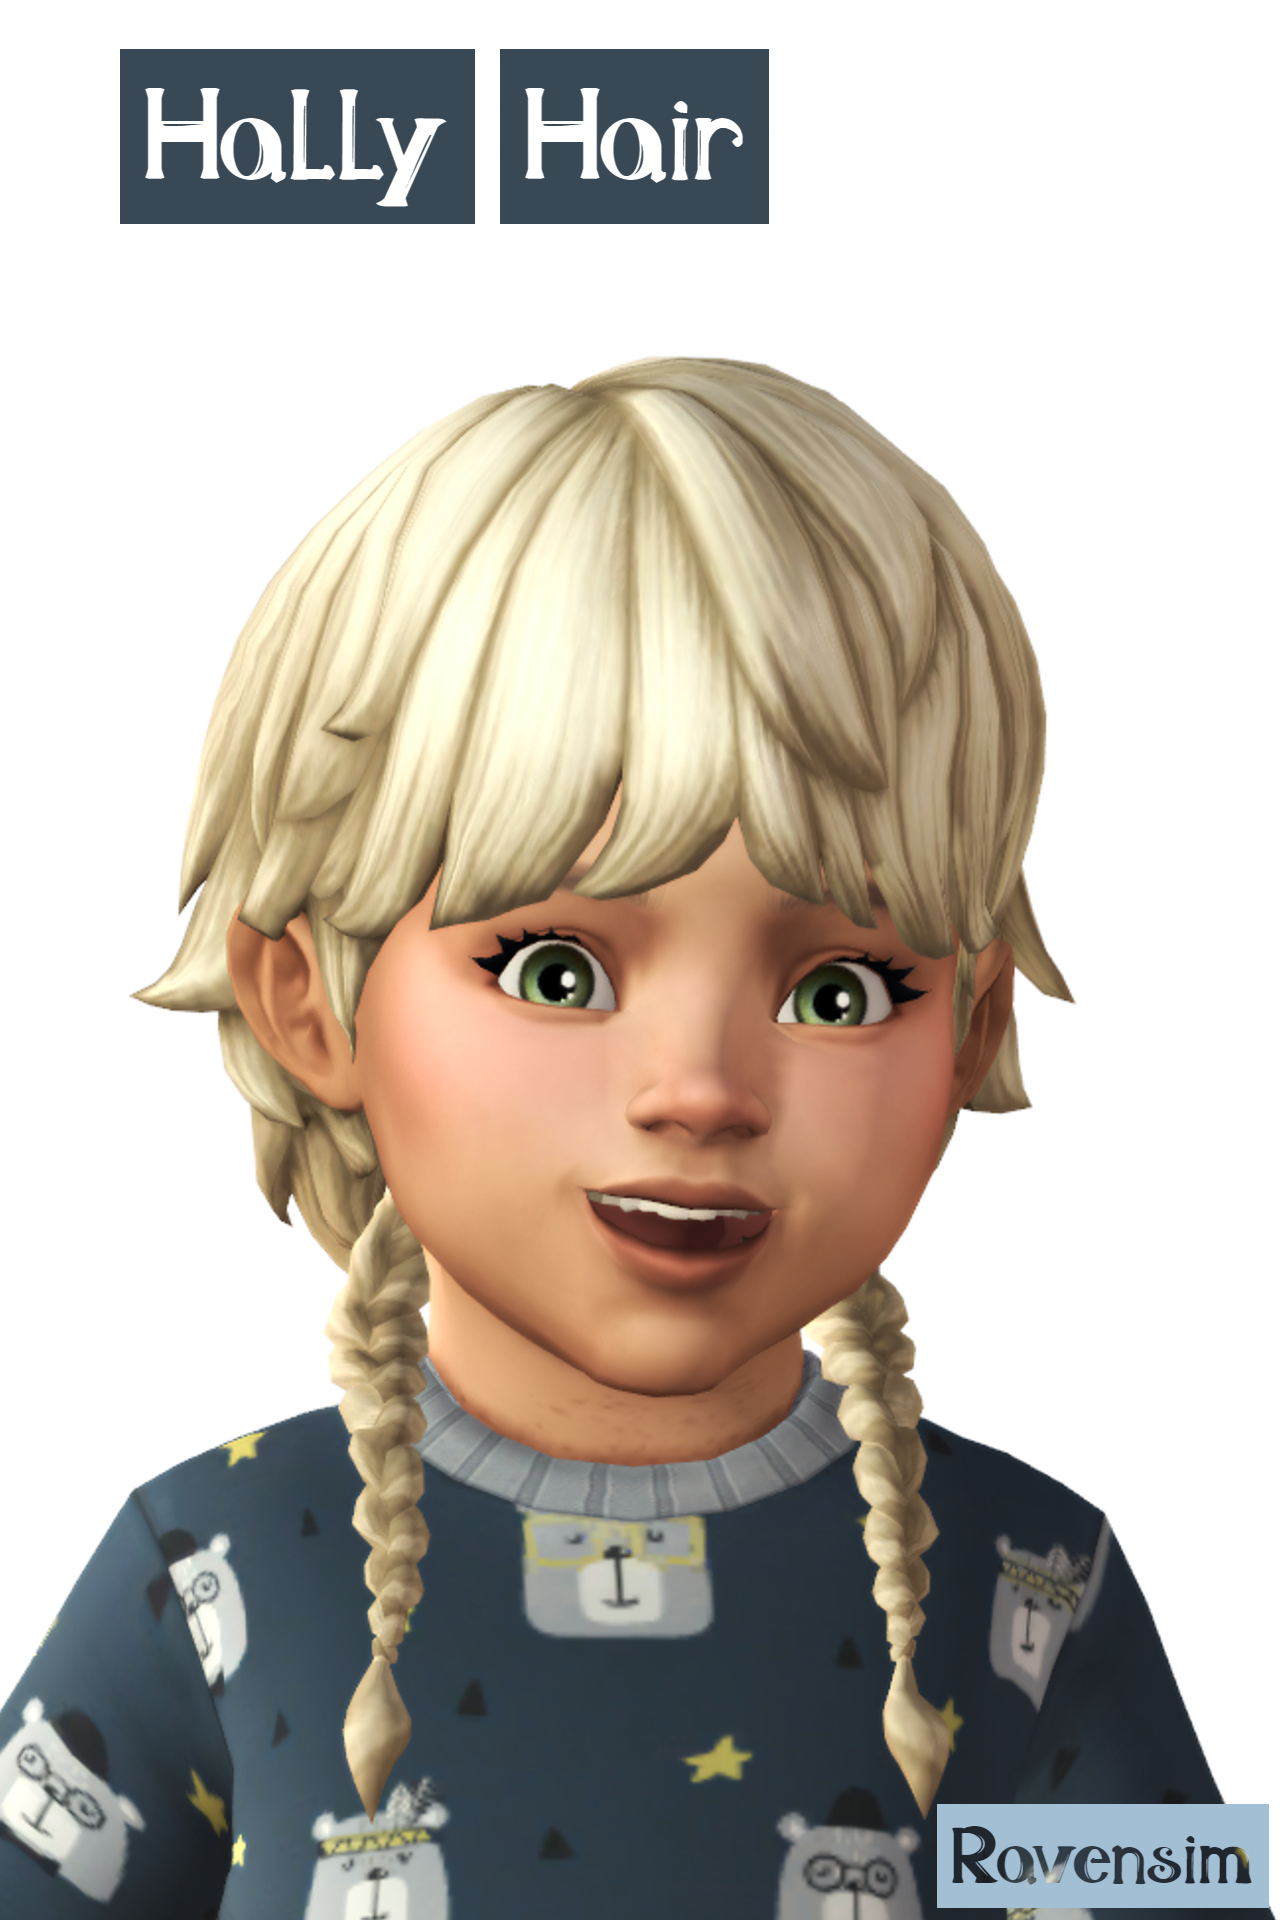 Hally Hair For Toddlers - The Sims 4 Create a Sim - CurseForge